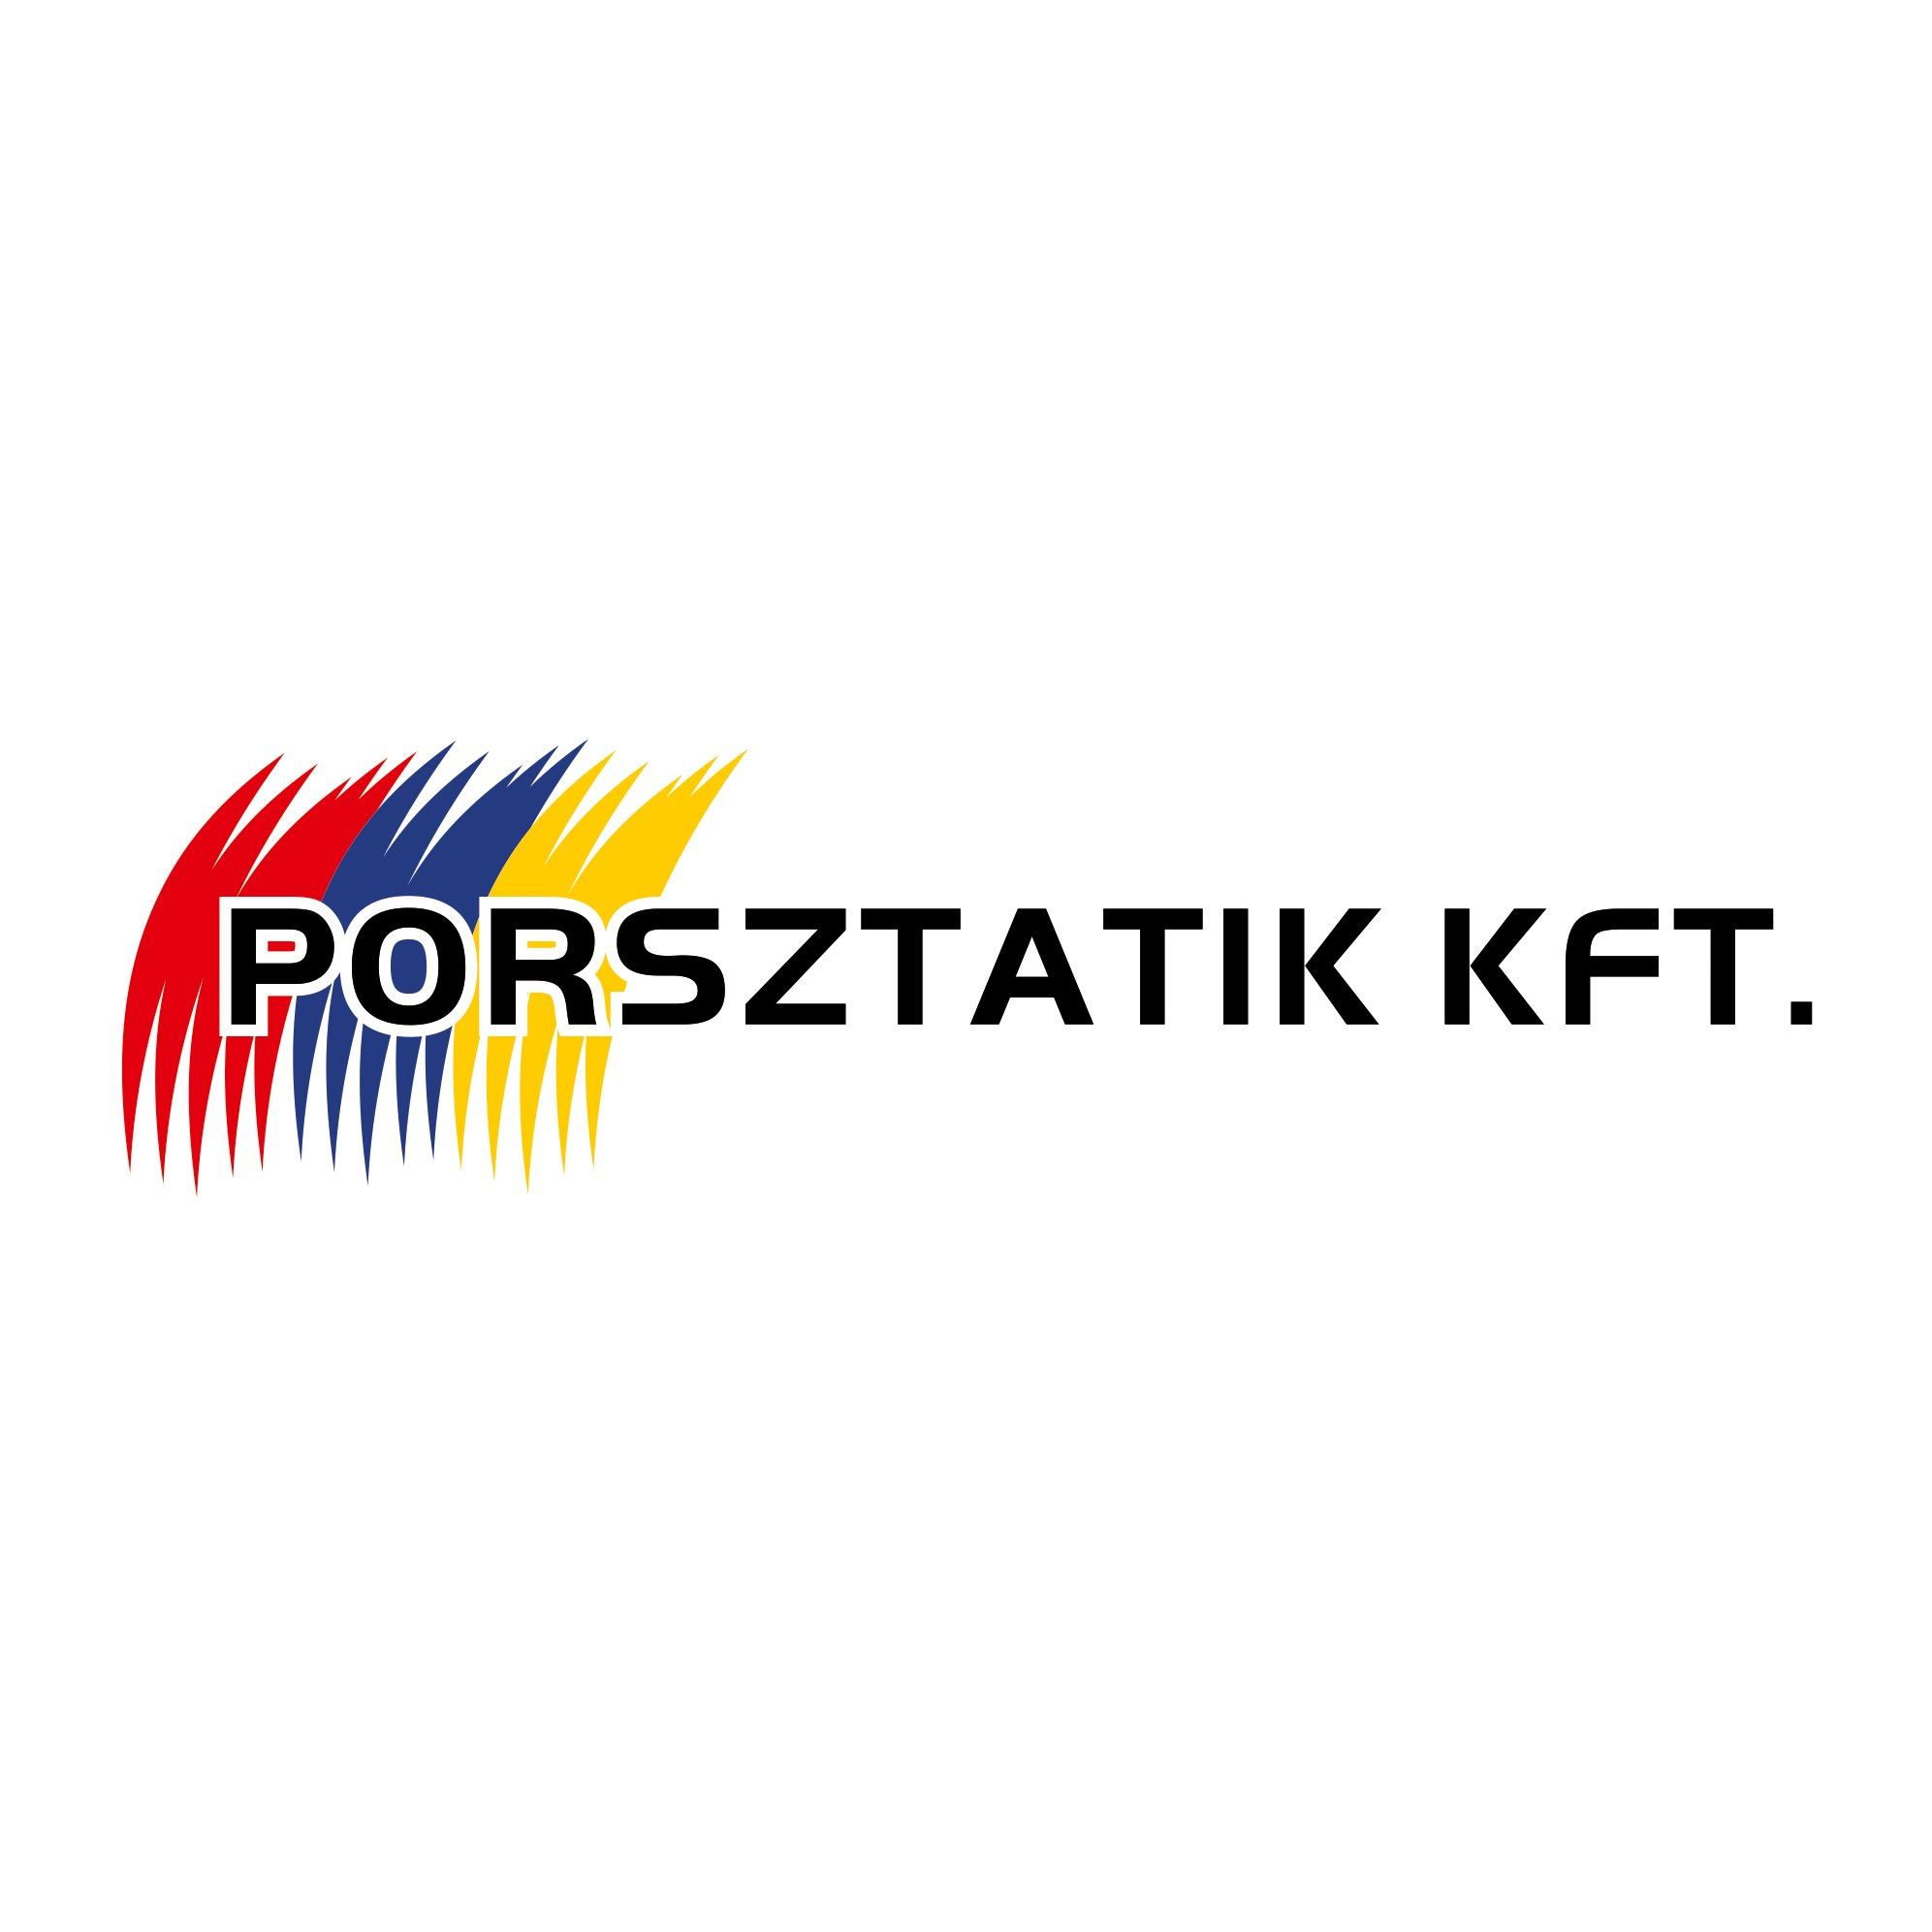 Porsztatik Kft. - Powder Coating Service - Vác - 06 30 687 6249 Hungary | ShowMeLocal.com